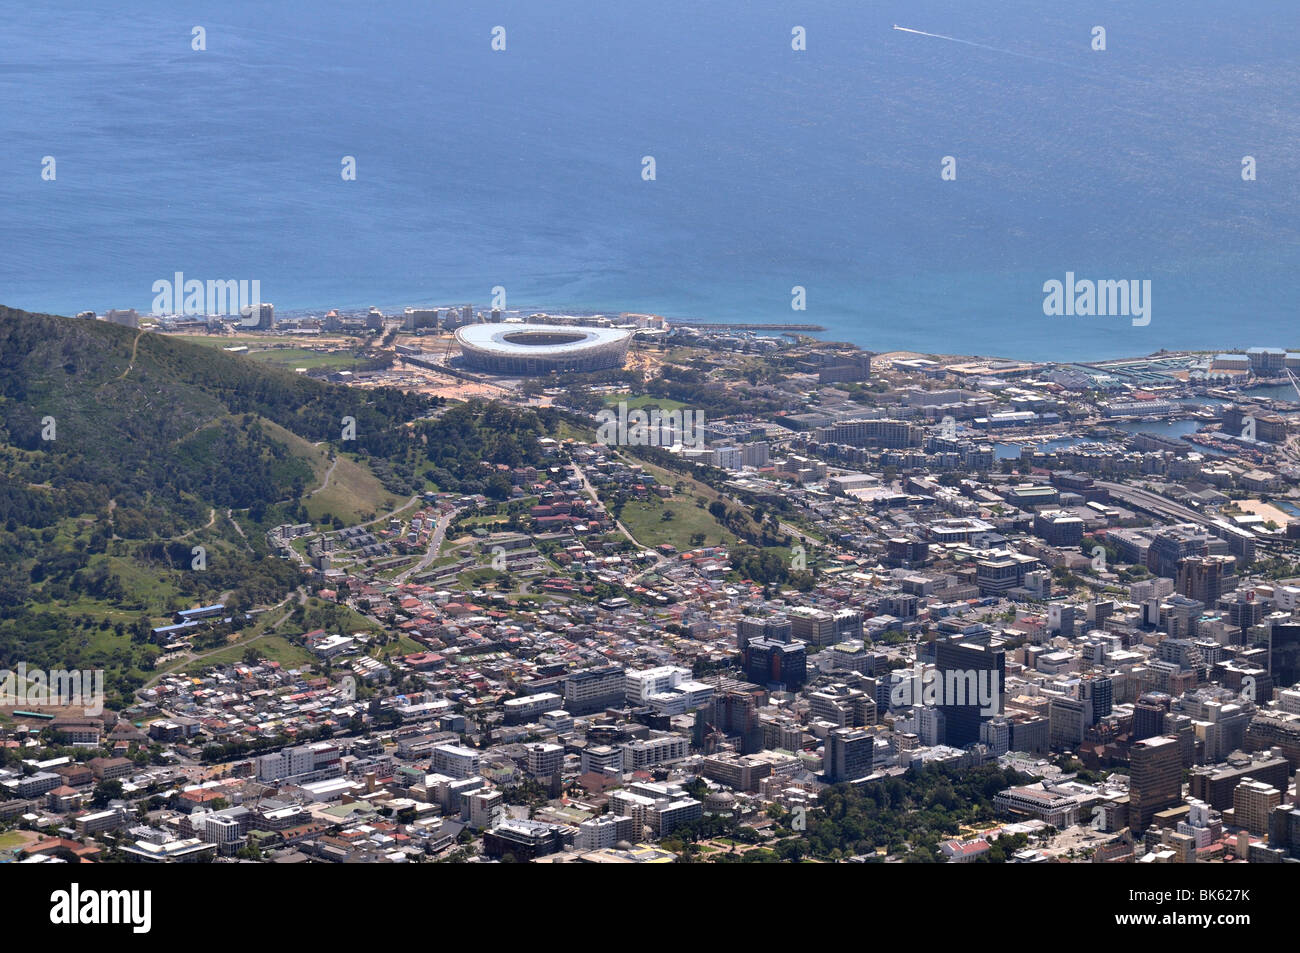 WM 2010, Green Point Stadion Fußball Stadion Baustelle, Blick vom Tafelberg, Cape Town, South Africa, Afri Stockfoto